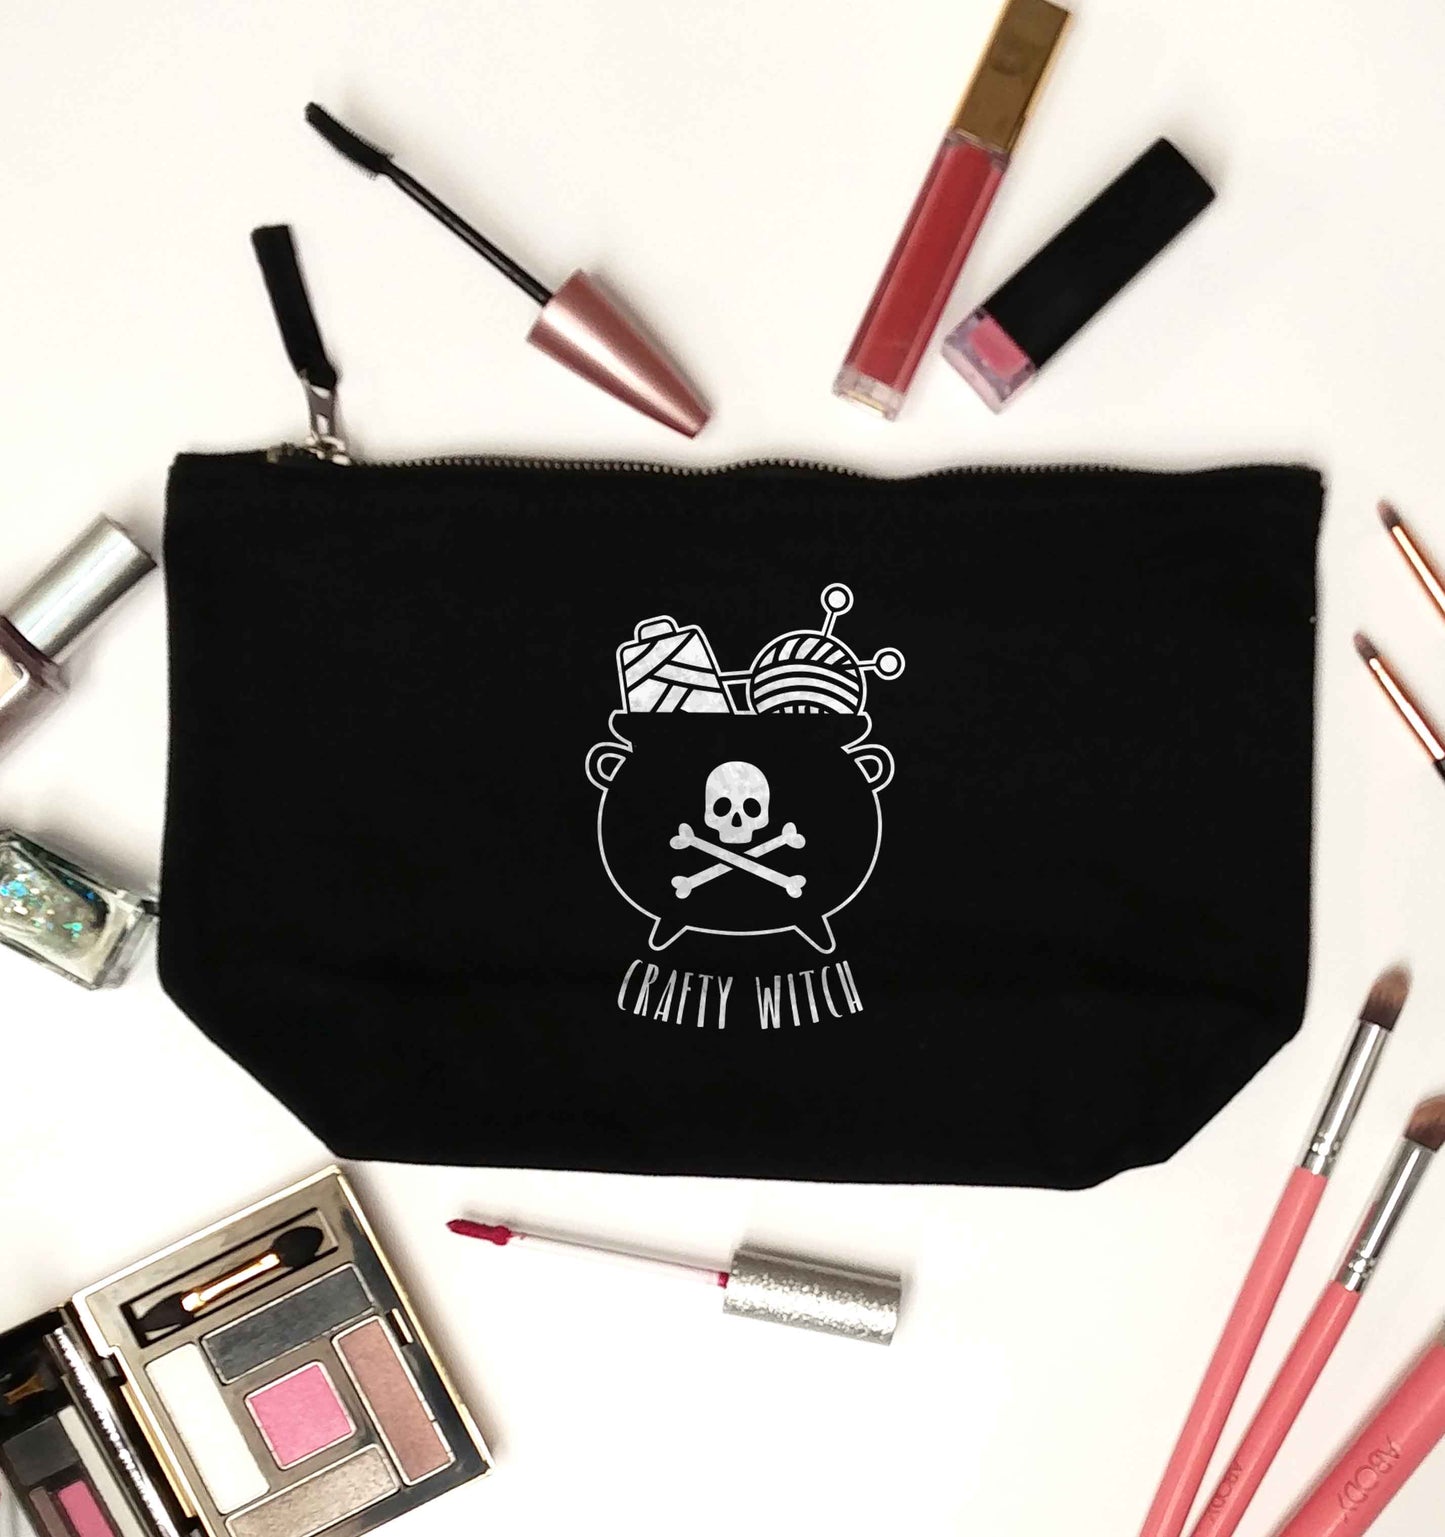 Crafty witch black makeup bag